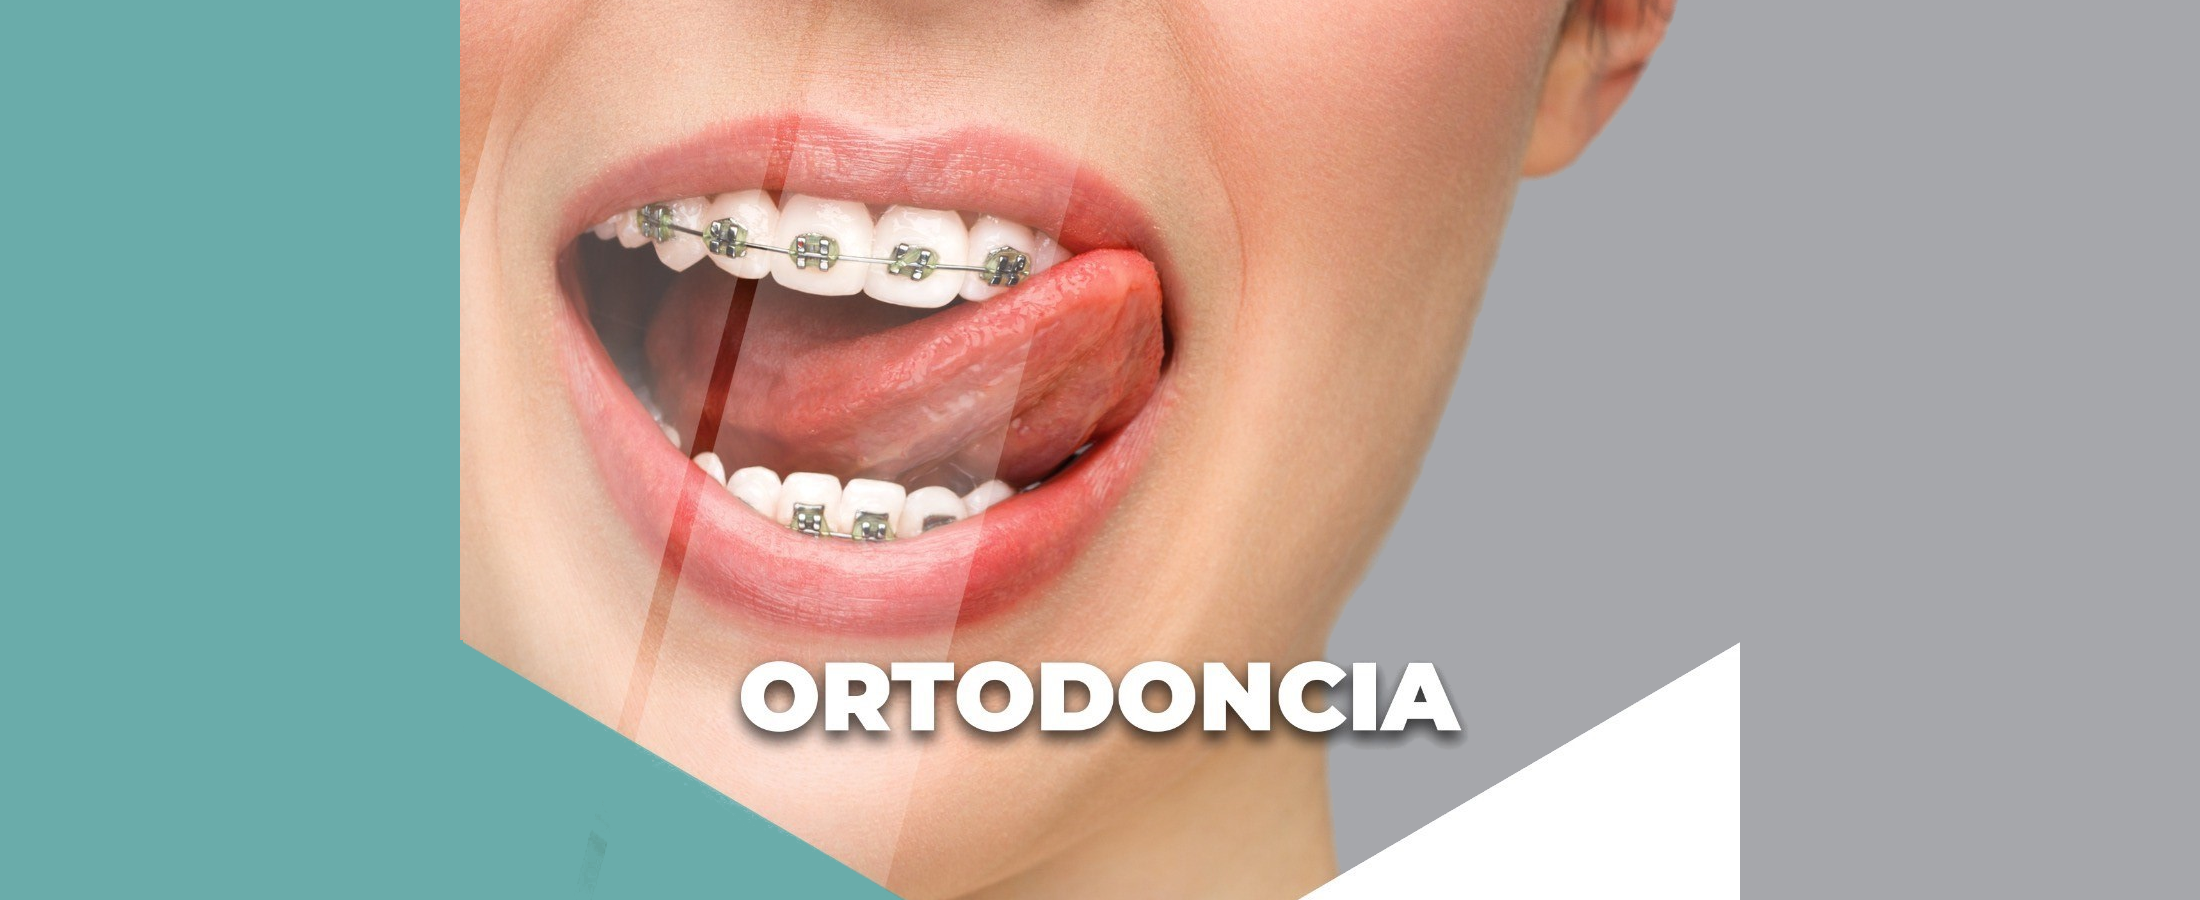 ortodonciaa